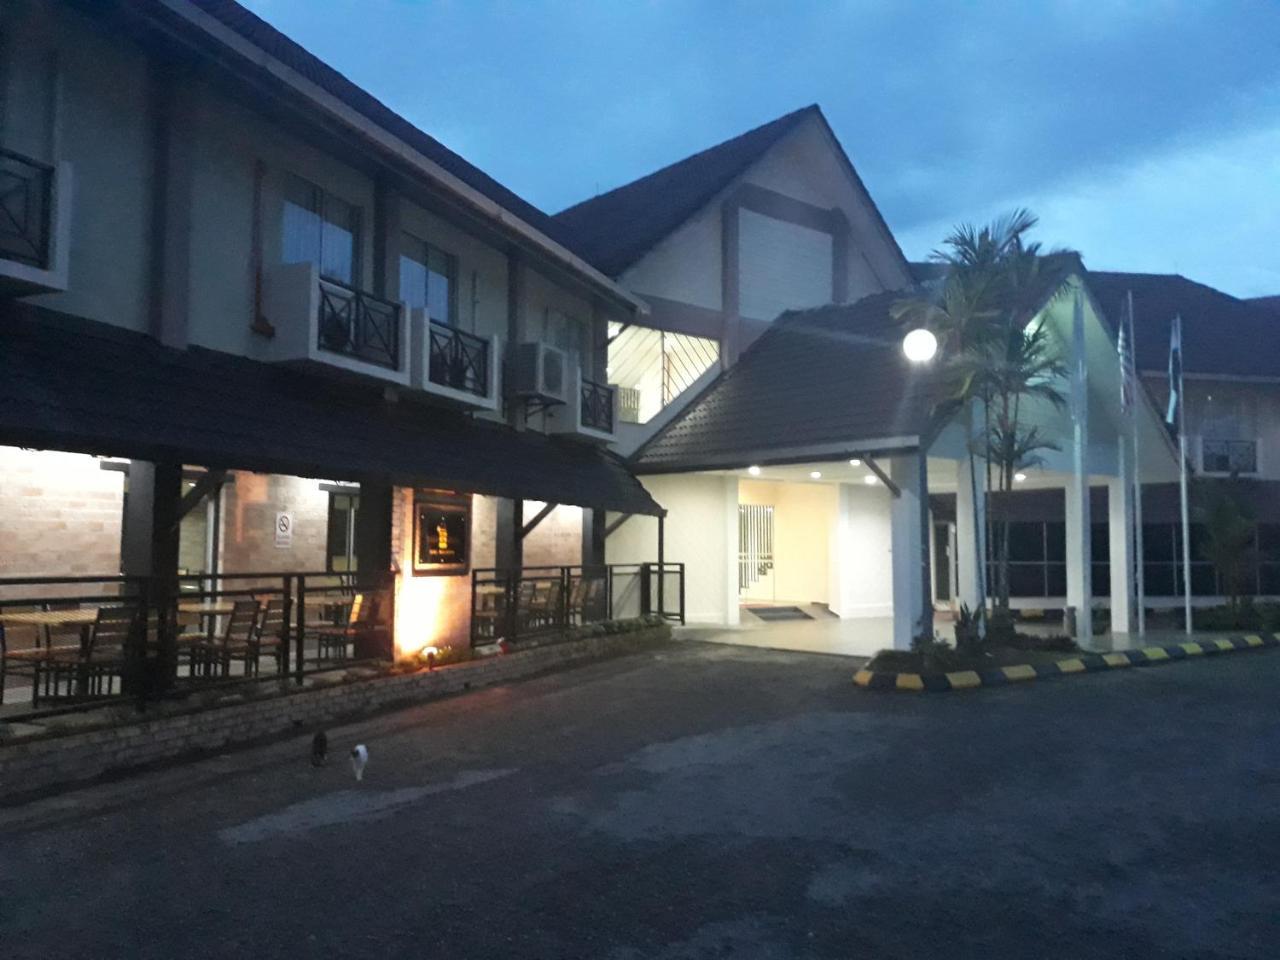 Hotel Seri Malaysia Temerloh Exterior photo